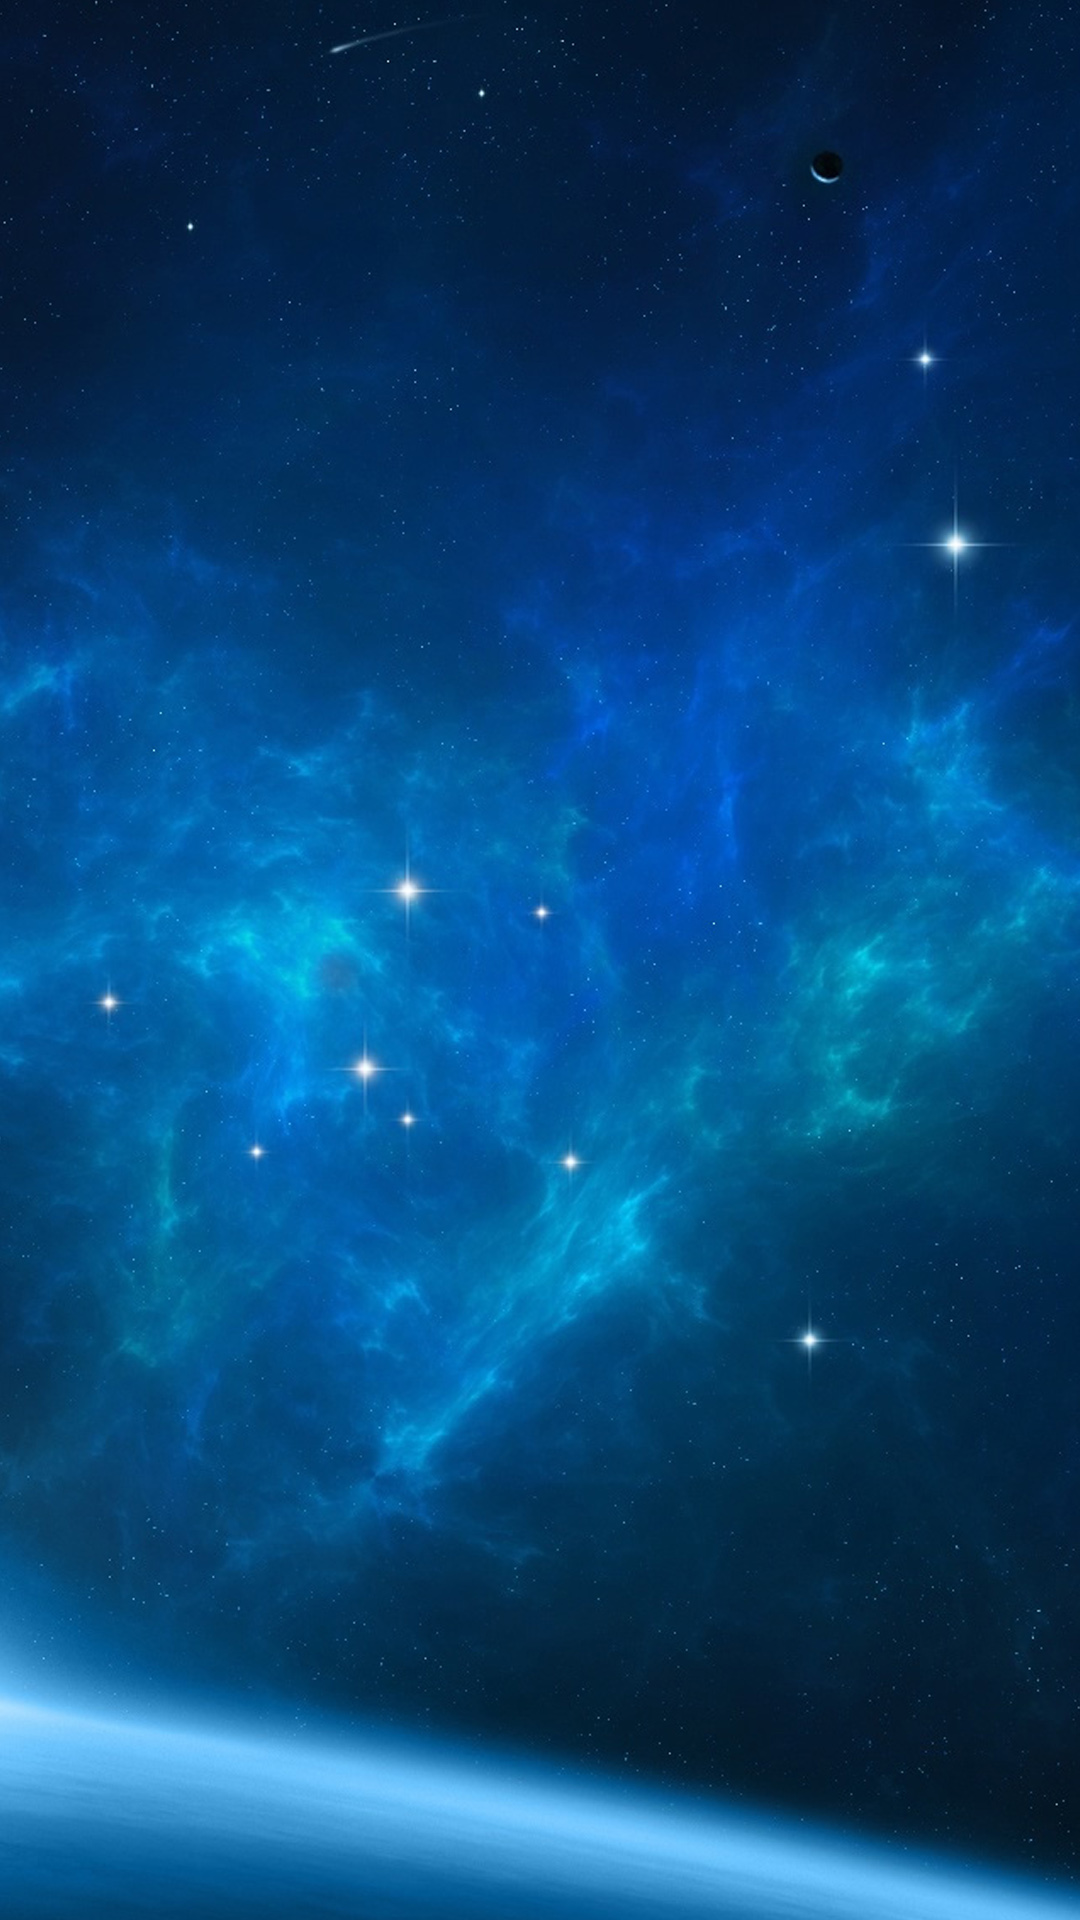 galaxie wallpaper hd,blau,himmel,atmosphäre,aqua,wasser